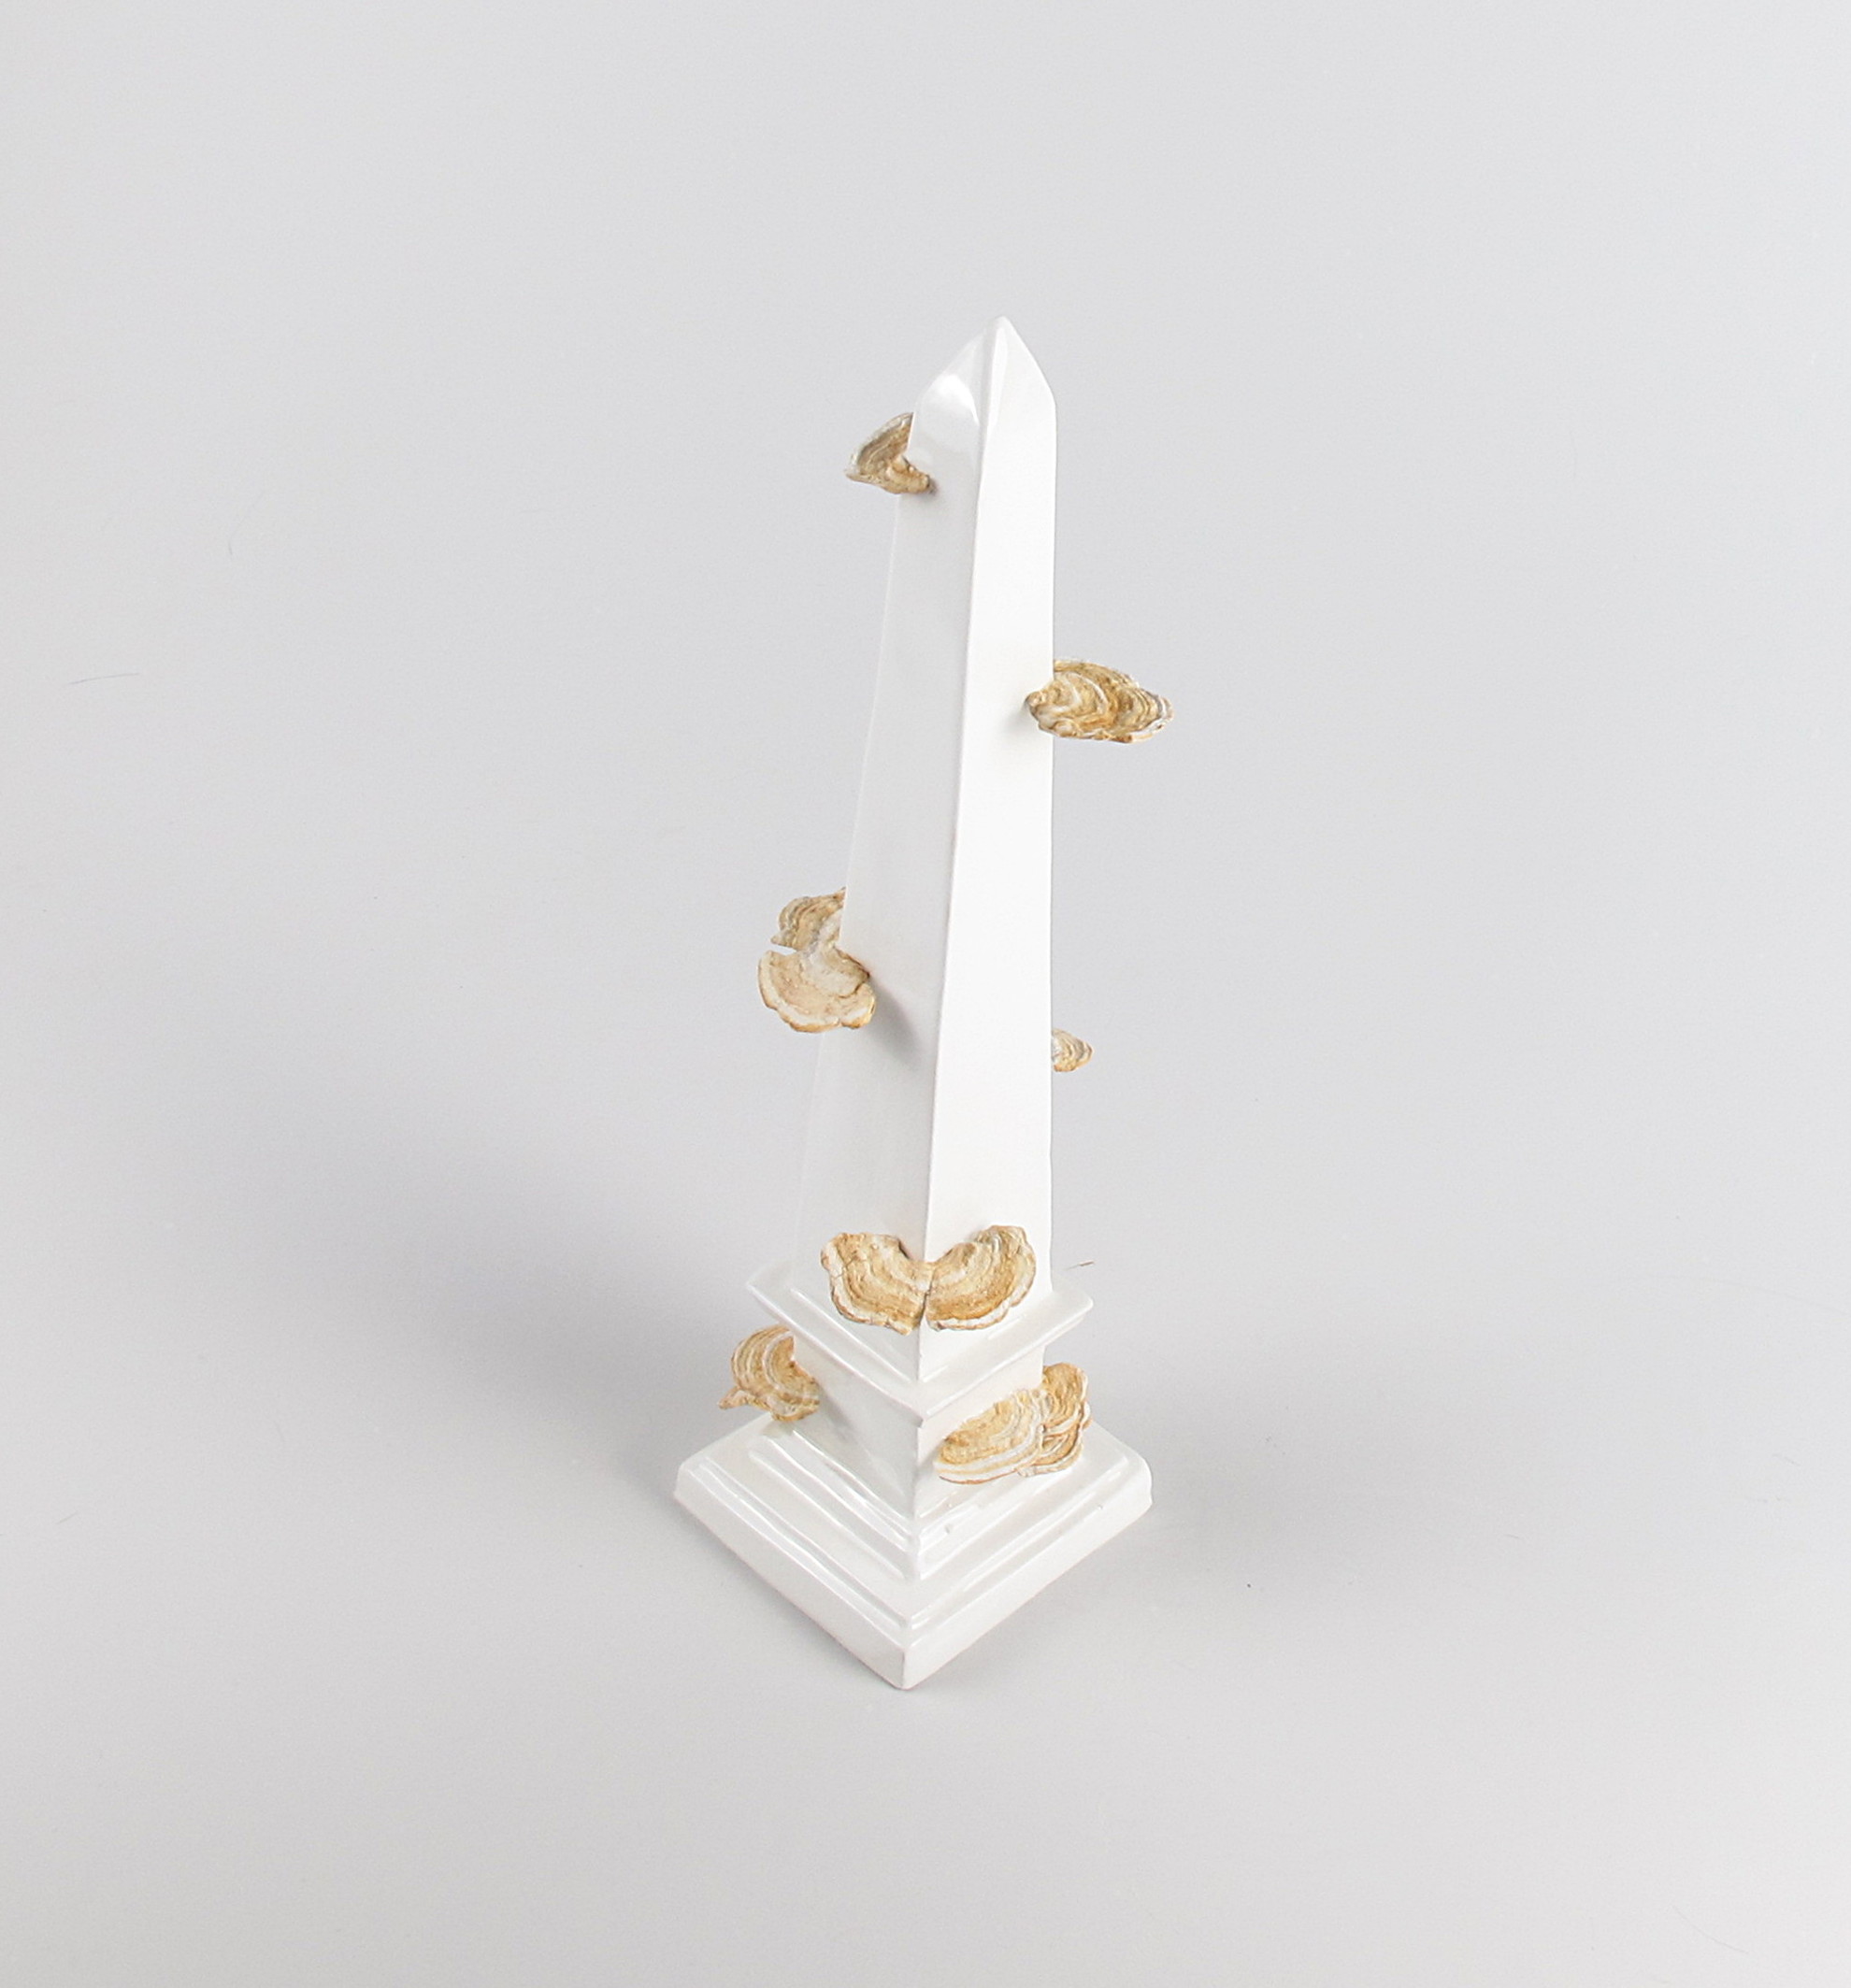 Monumento al tempo, Caterina Sbrana, 2020 contemporary art ceramic